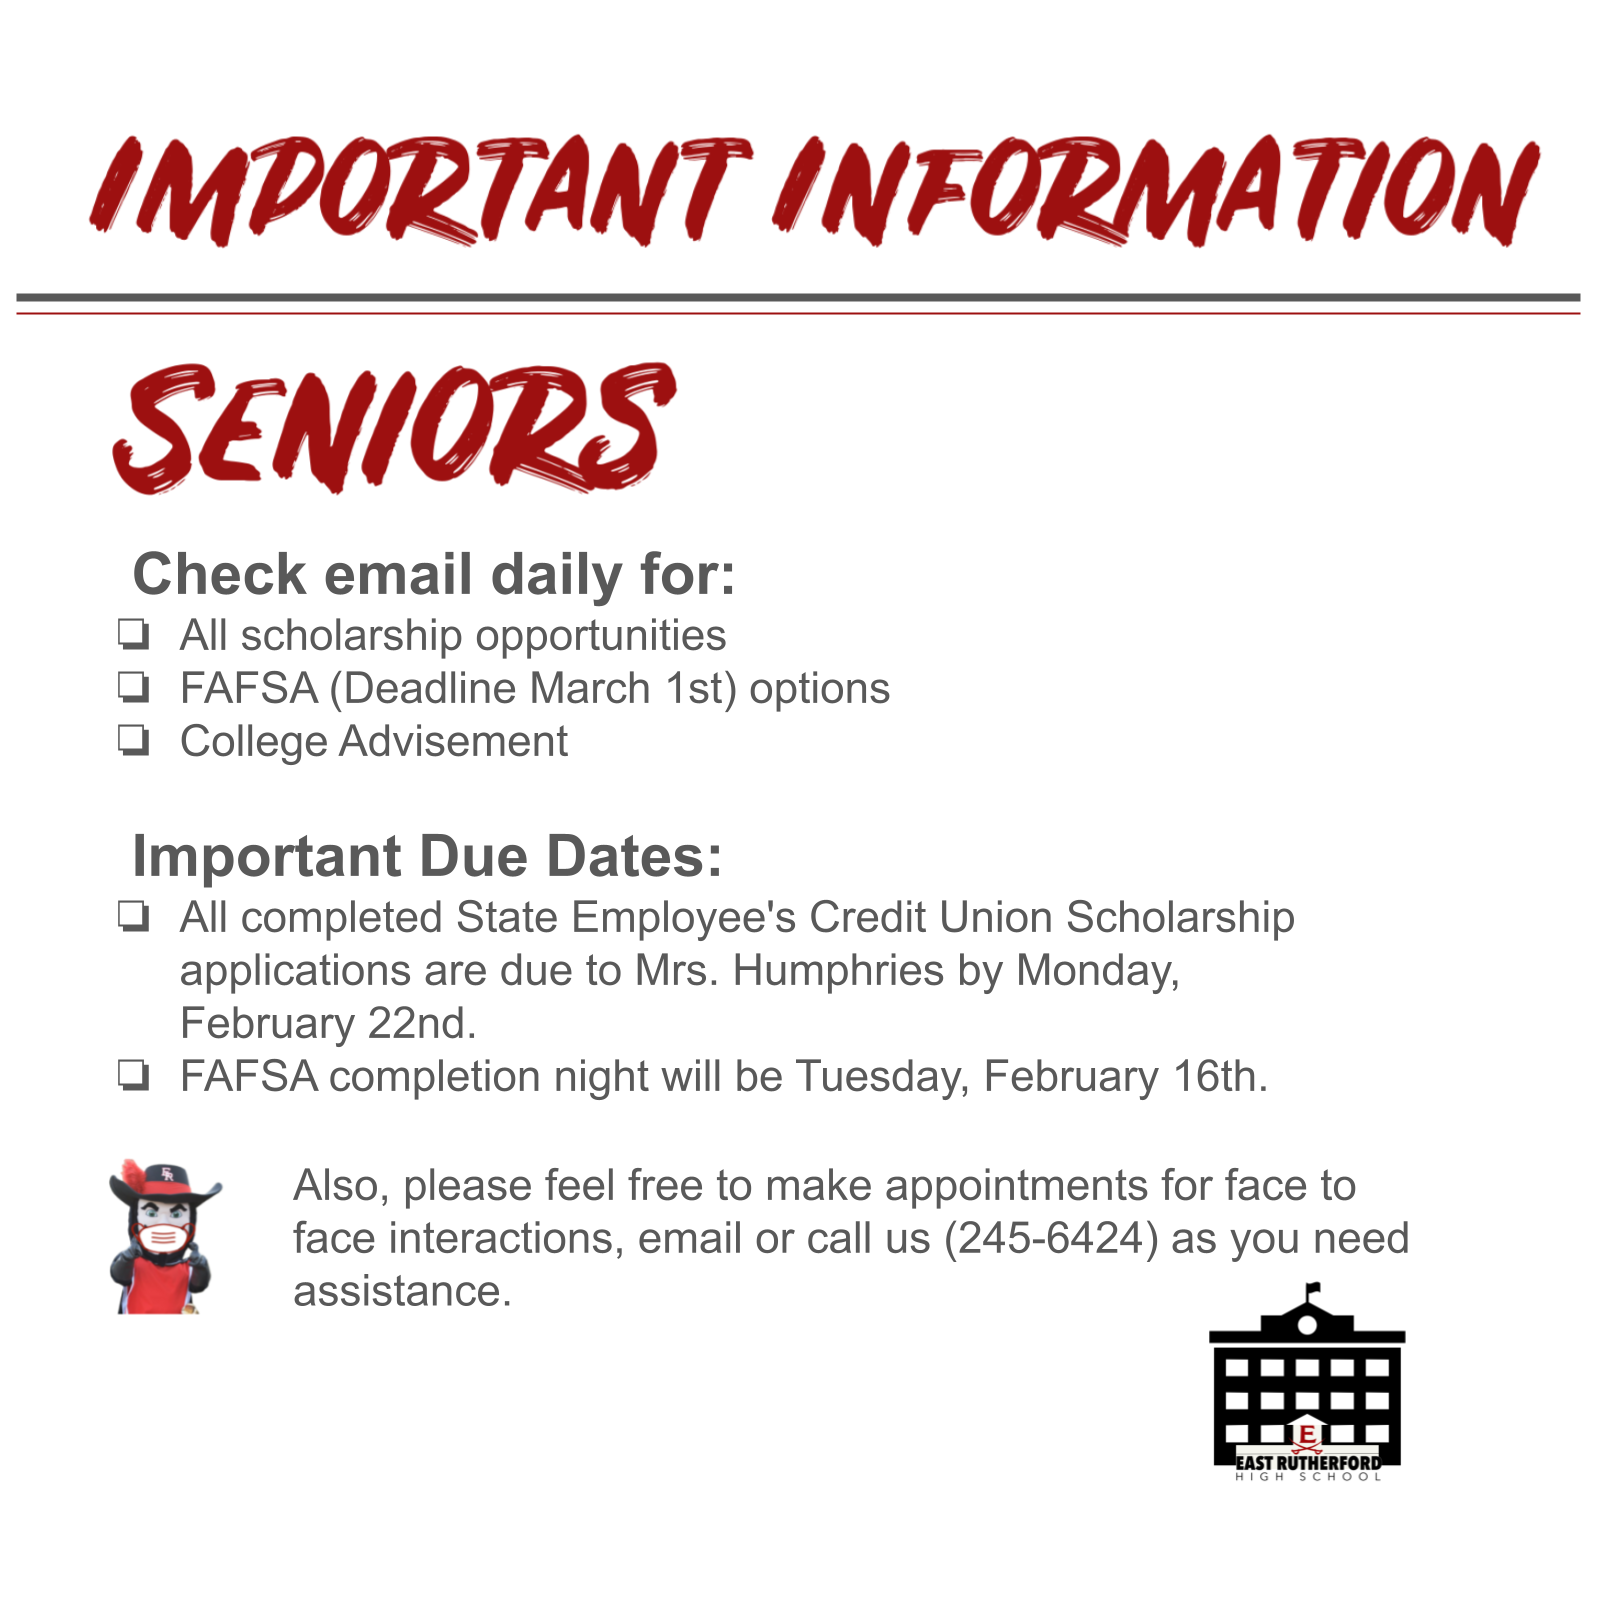 Senior Information